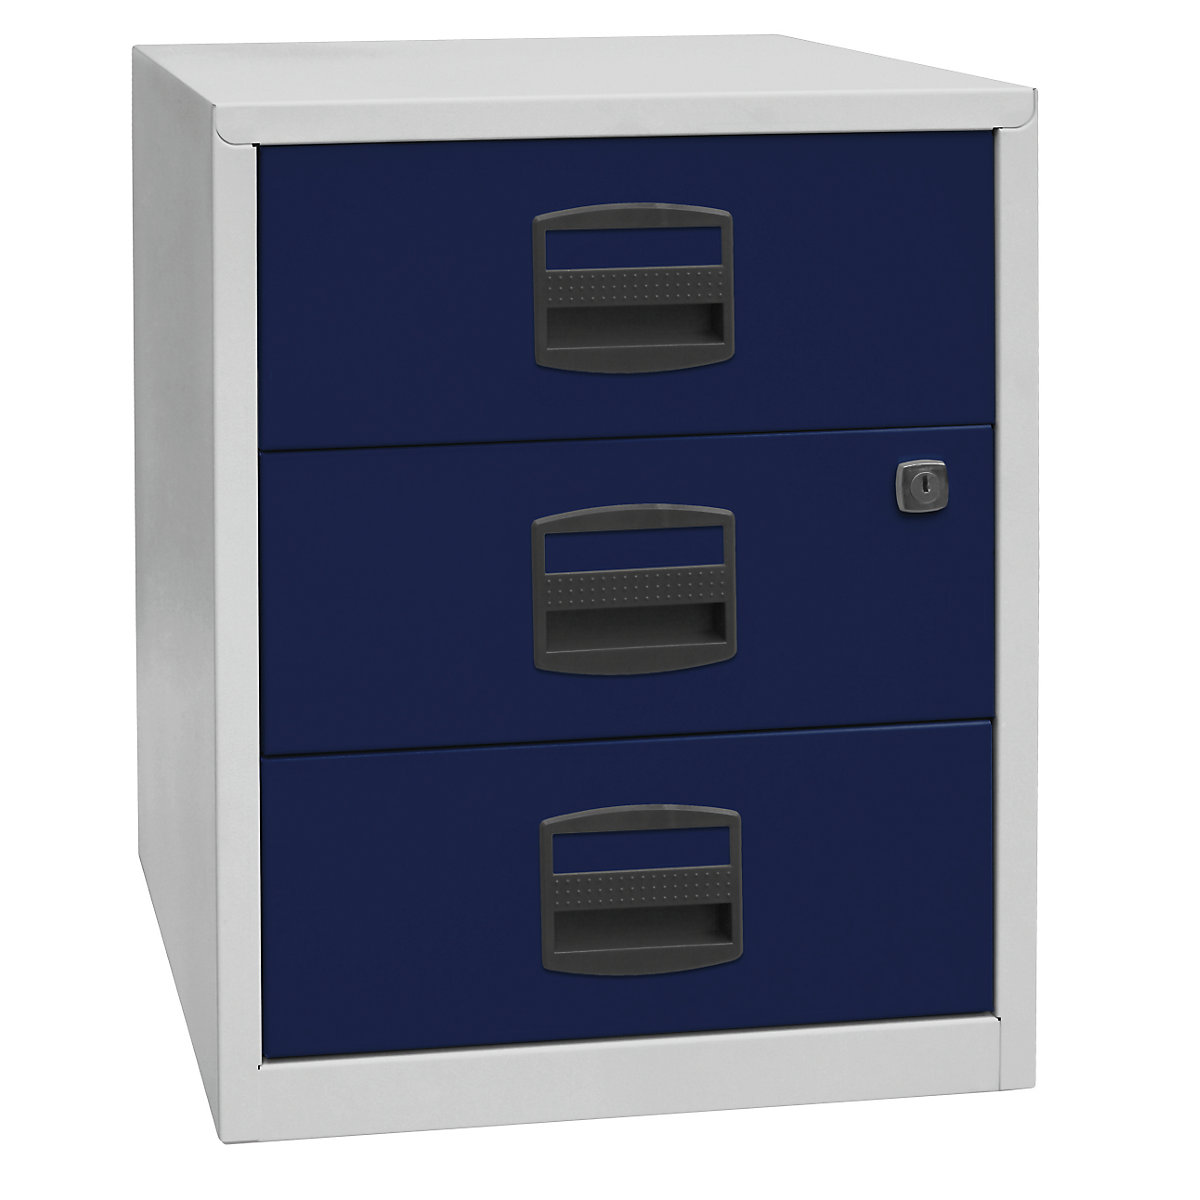 Caisson mobile hauteur bureau PFA – BISLEY, 3 tiroirs universels, gris clair / bleu oxford-6